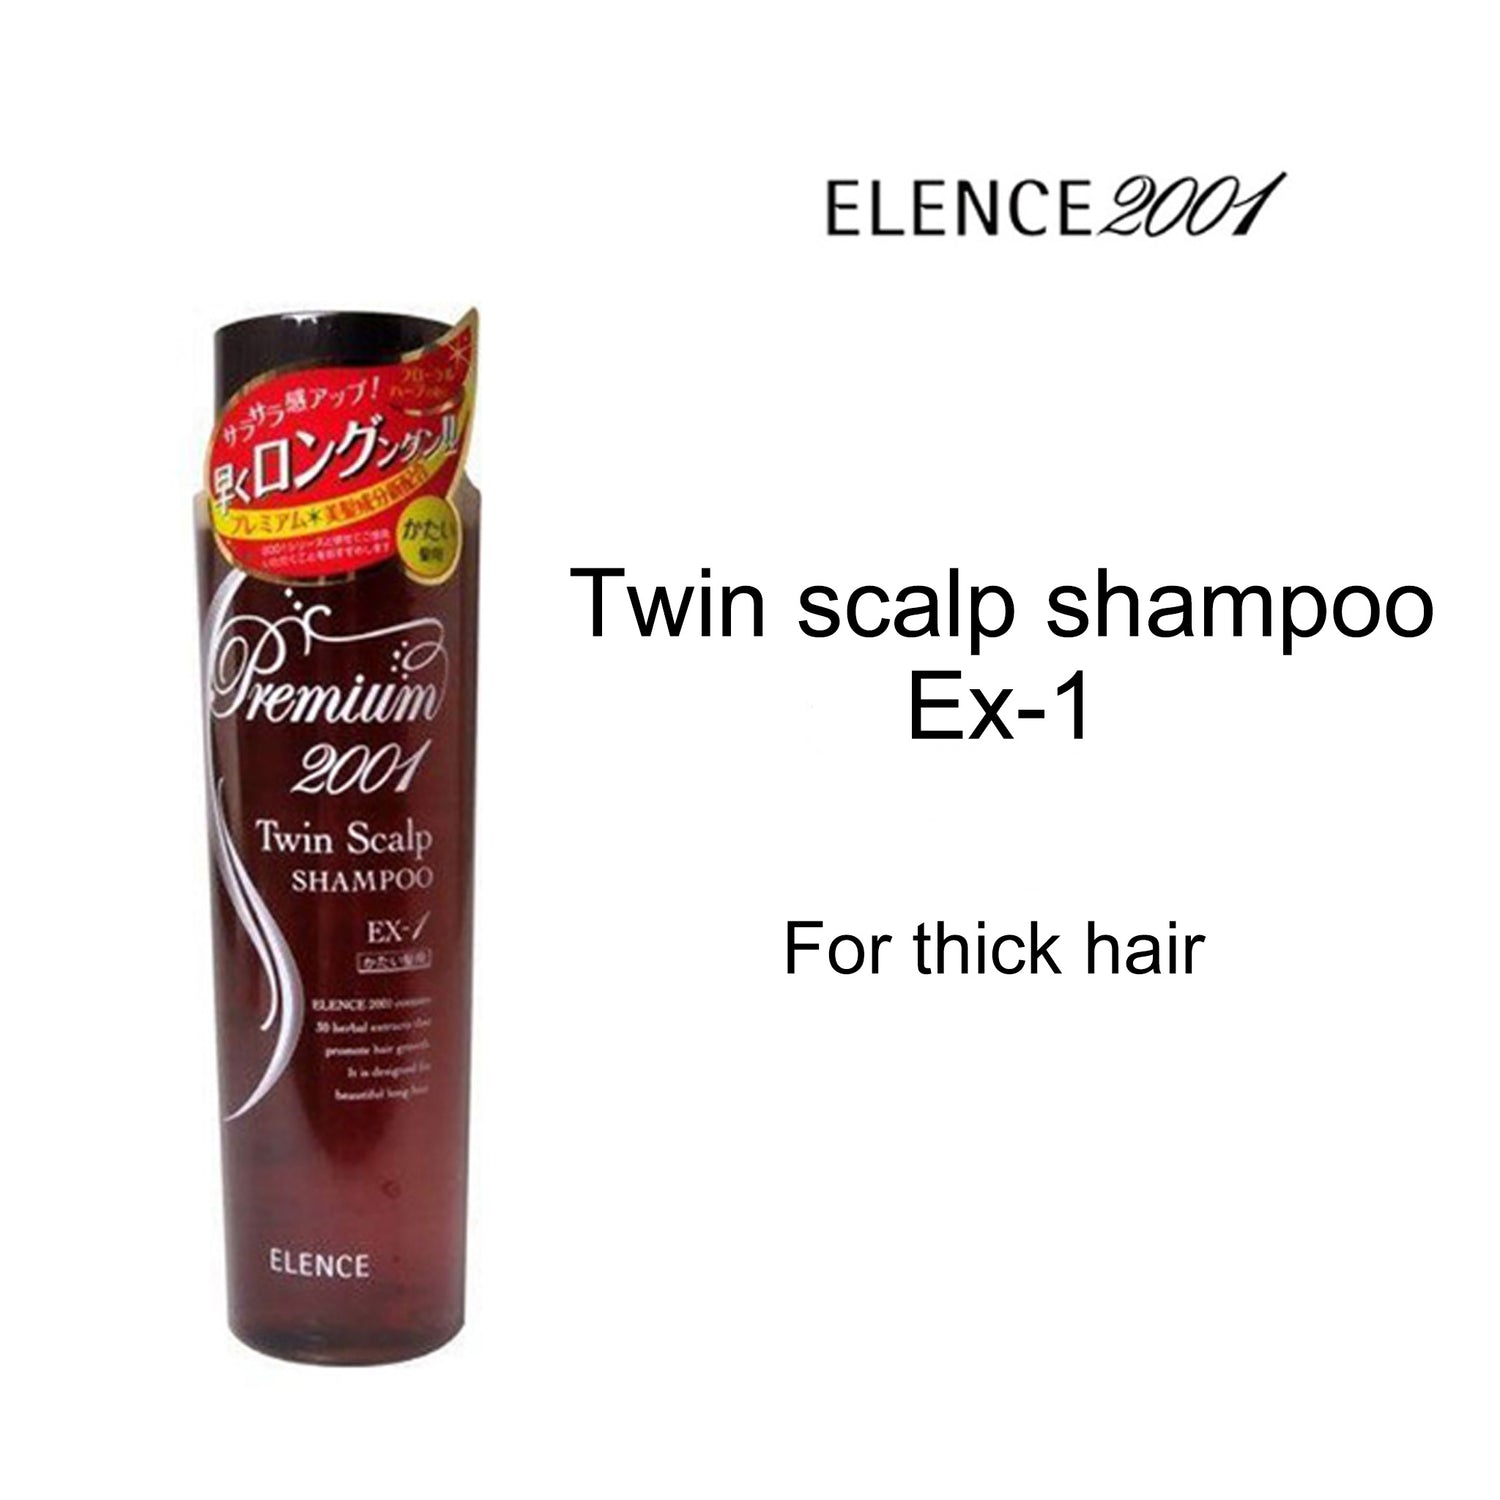 ELENCE Premium 2001 Twin Scalp Shampoo 320ml